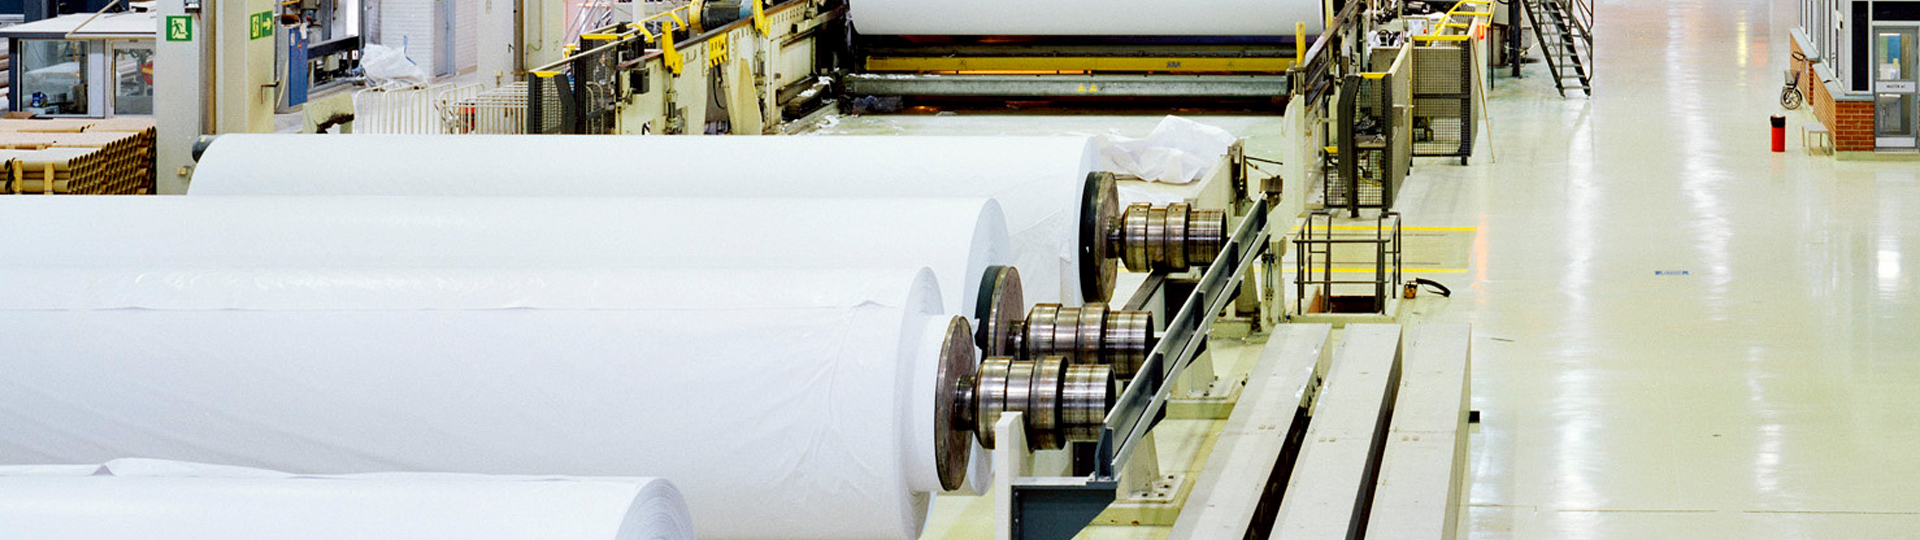 Paper Machine High Density Cleaner